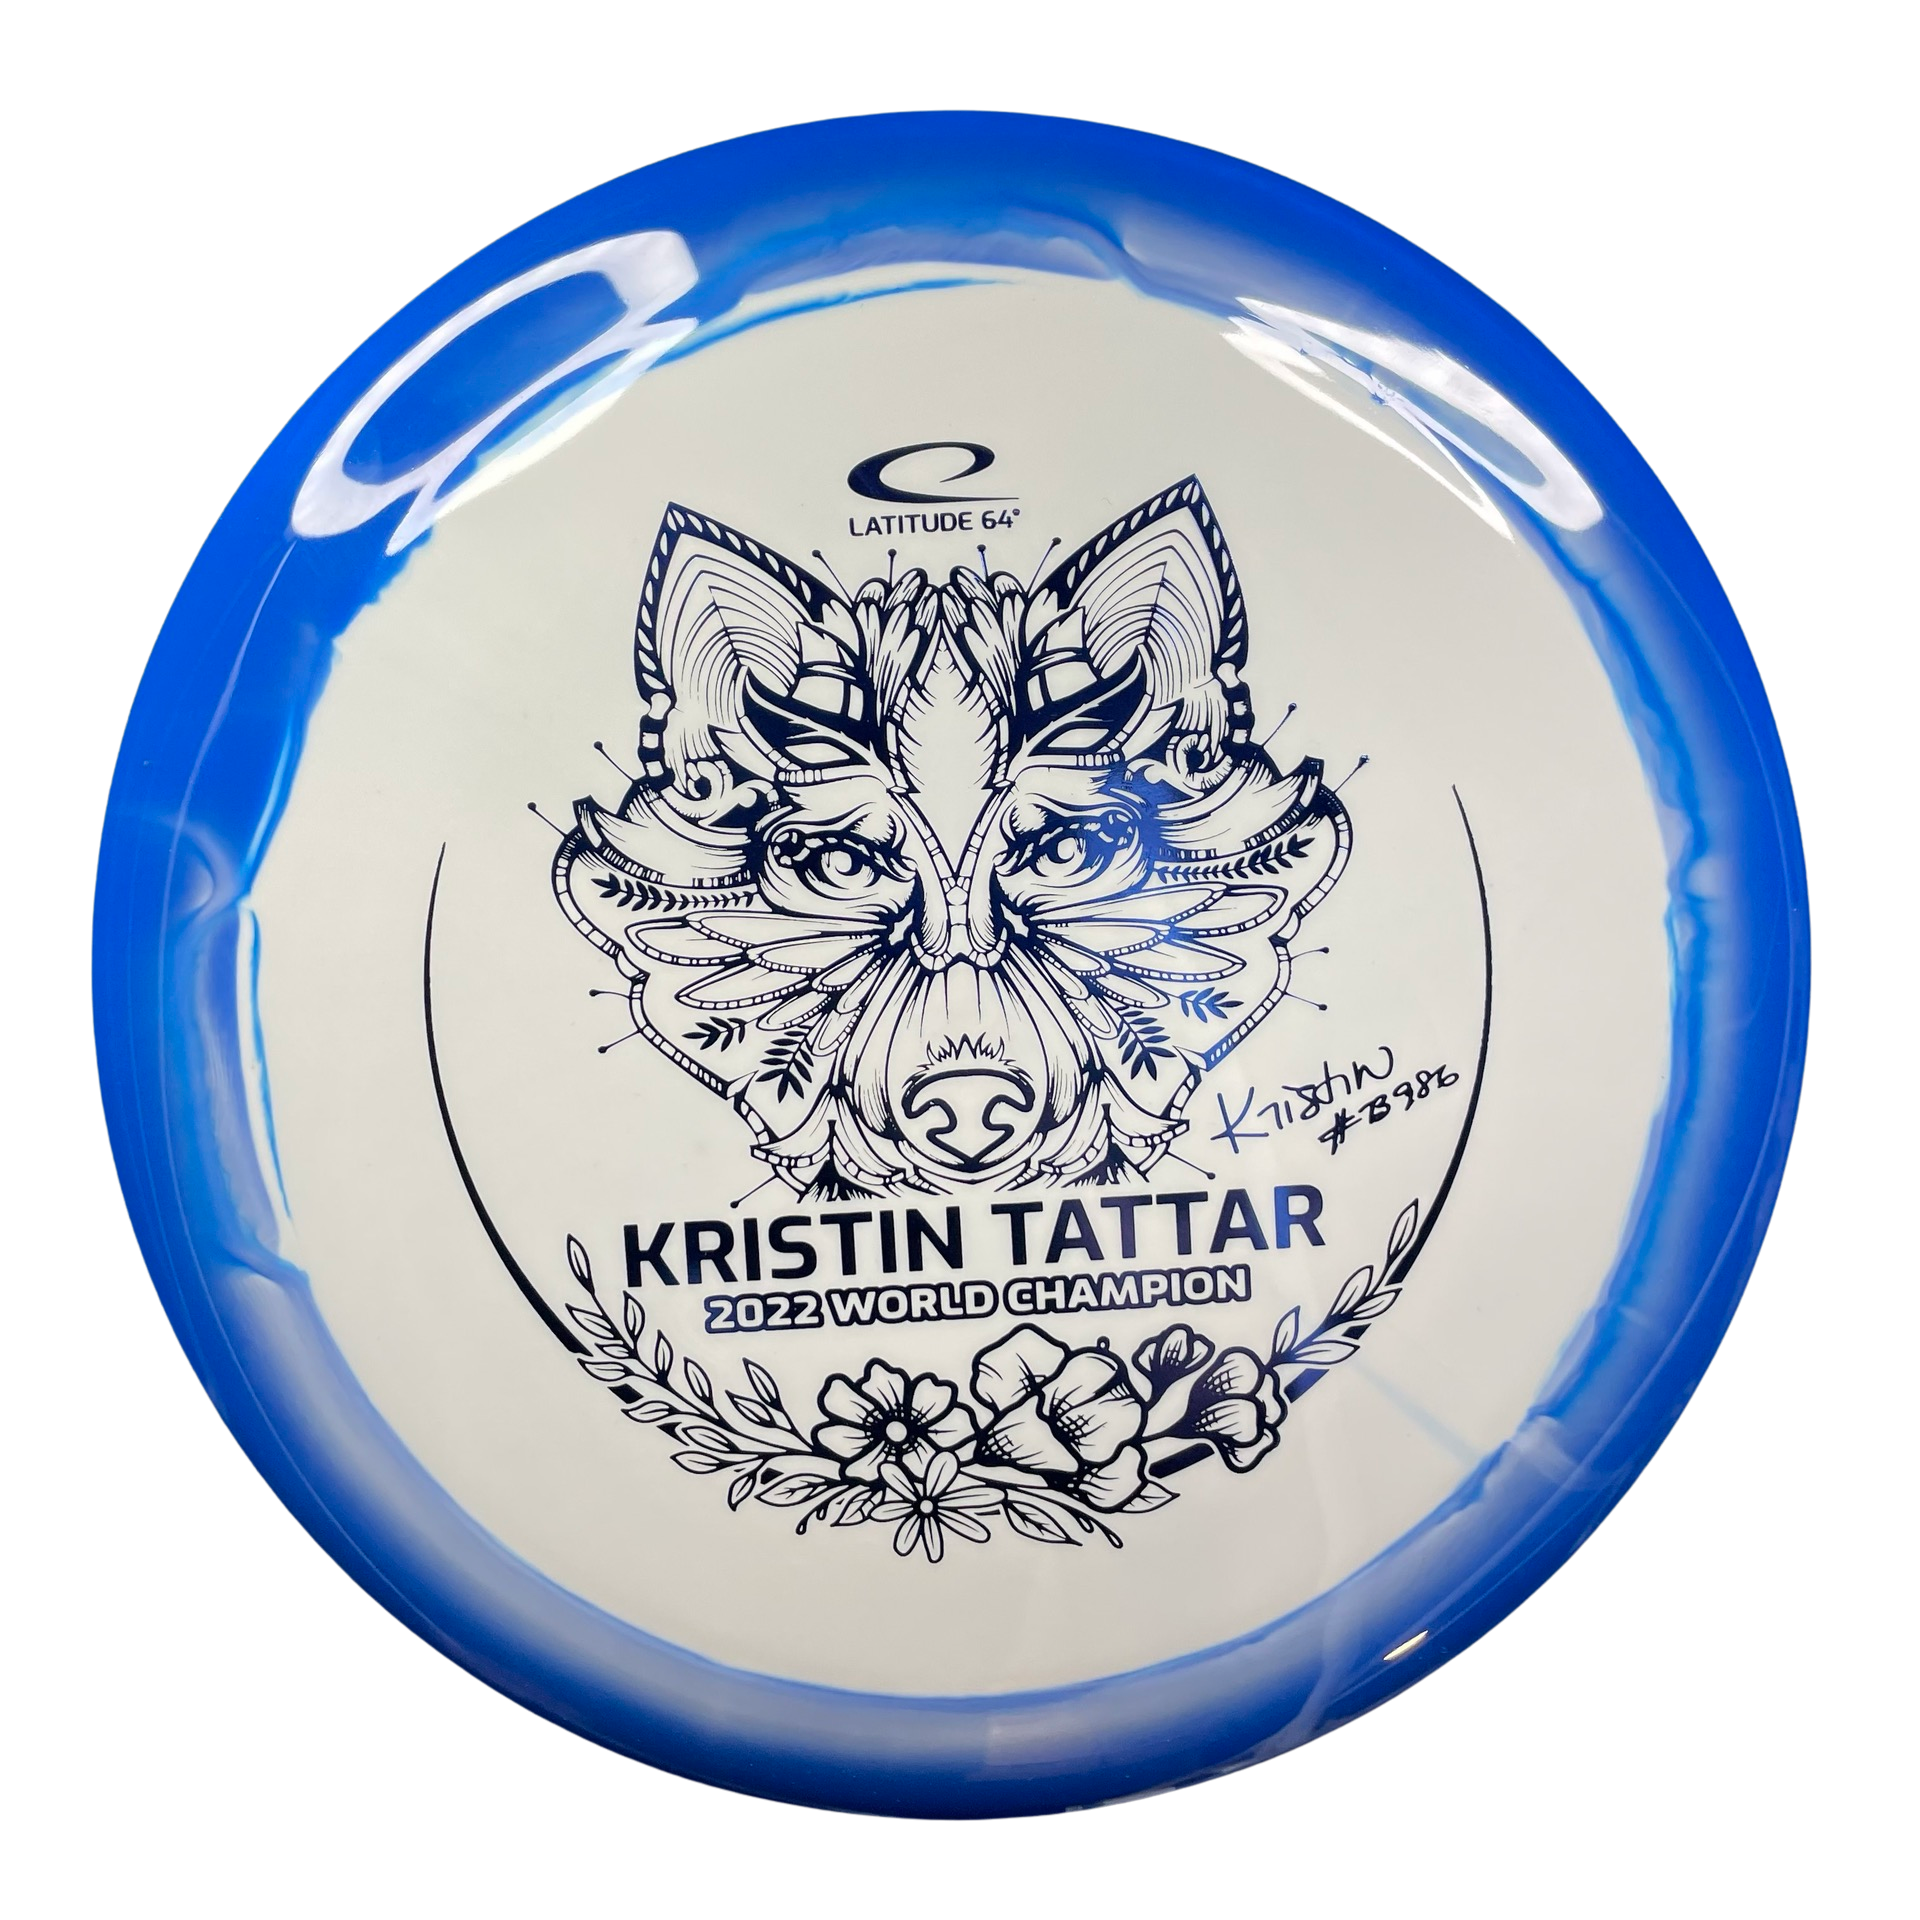 Latitude 64 Royal Grand Orbit Grace- Kristin Tattar 2022 World Champion